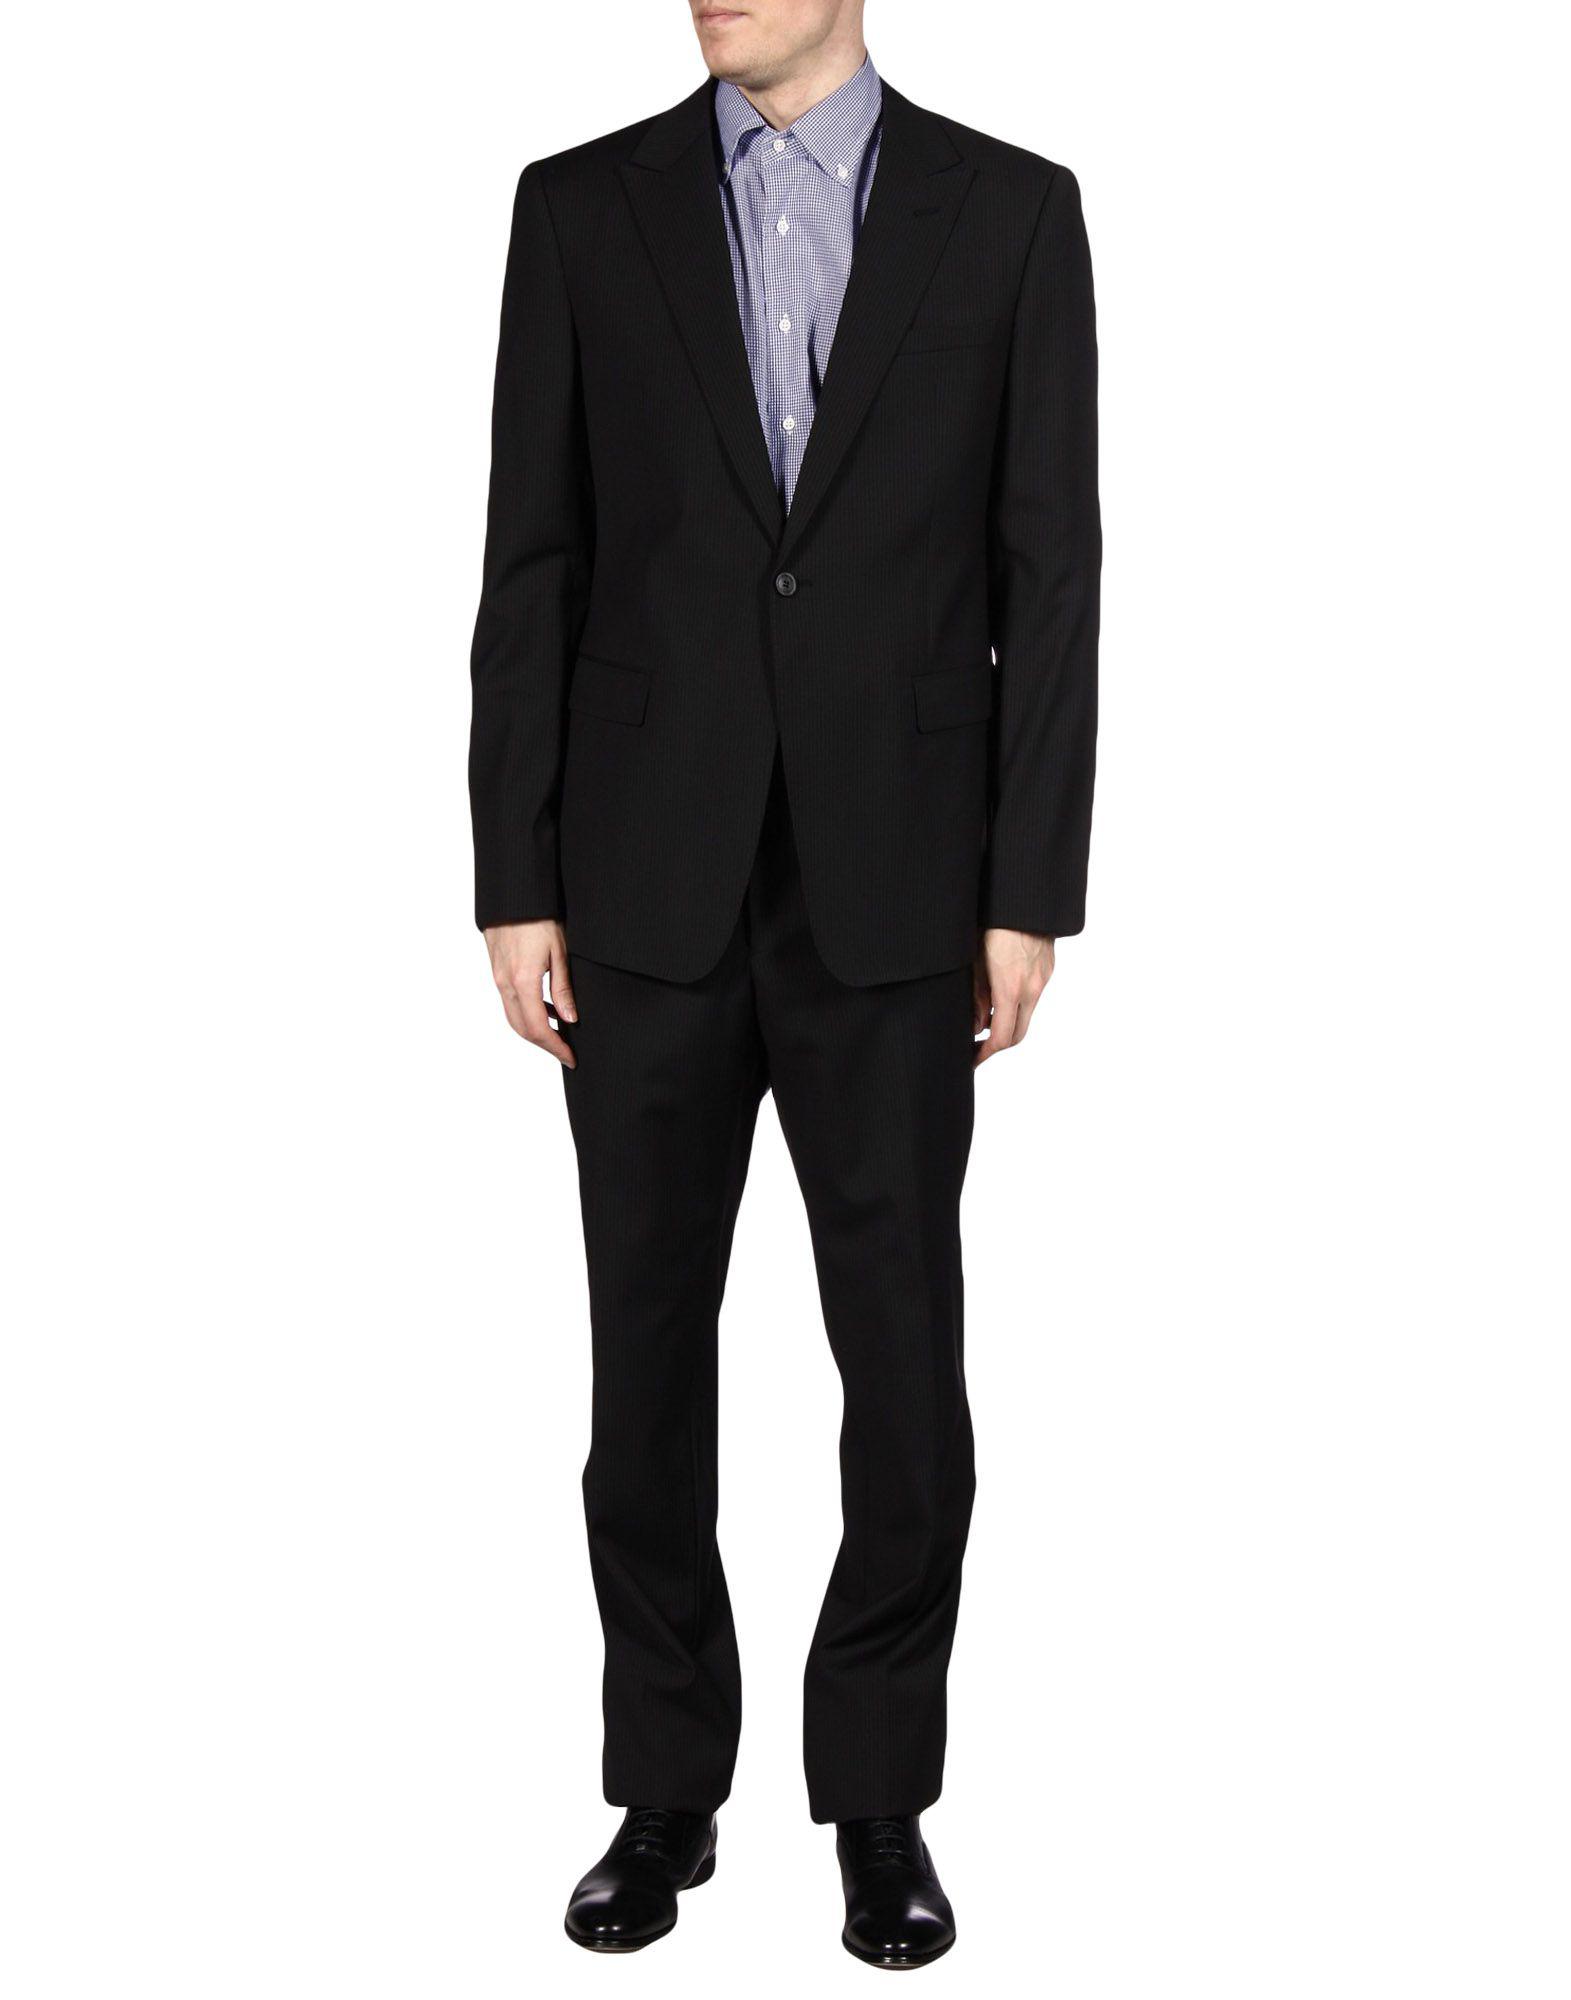 Emporio Armani Wool Suit in Black for Men - Lyst